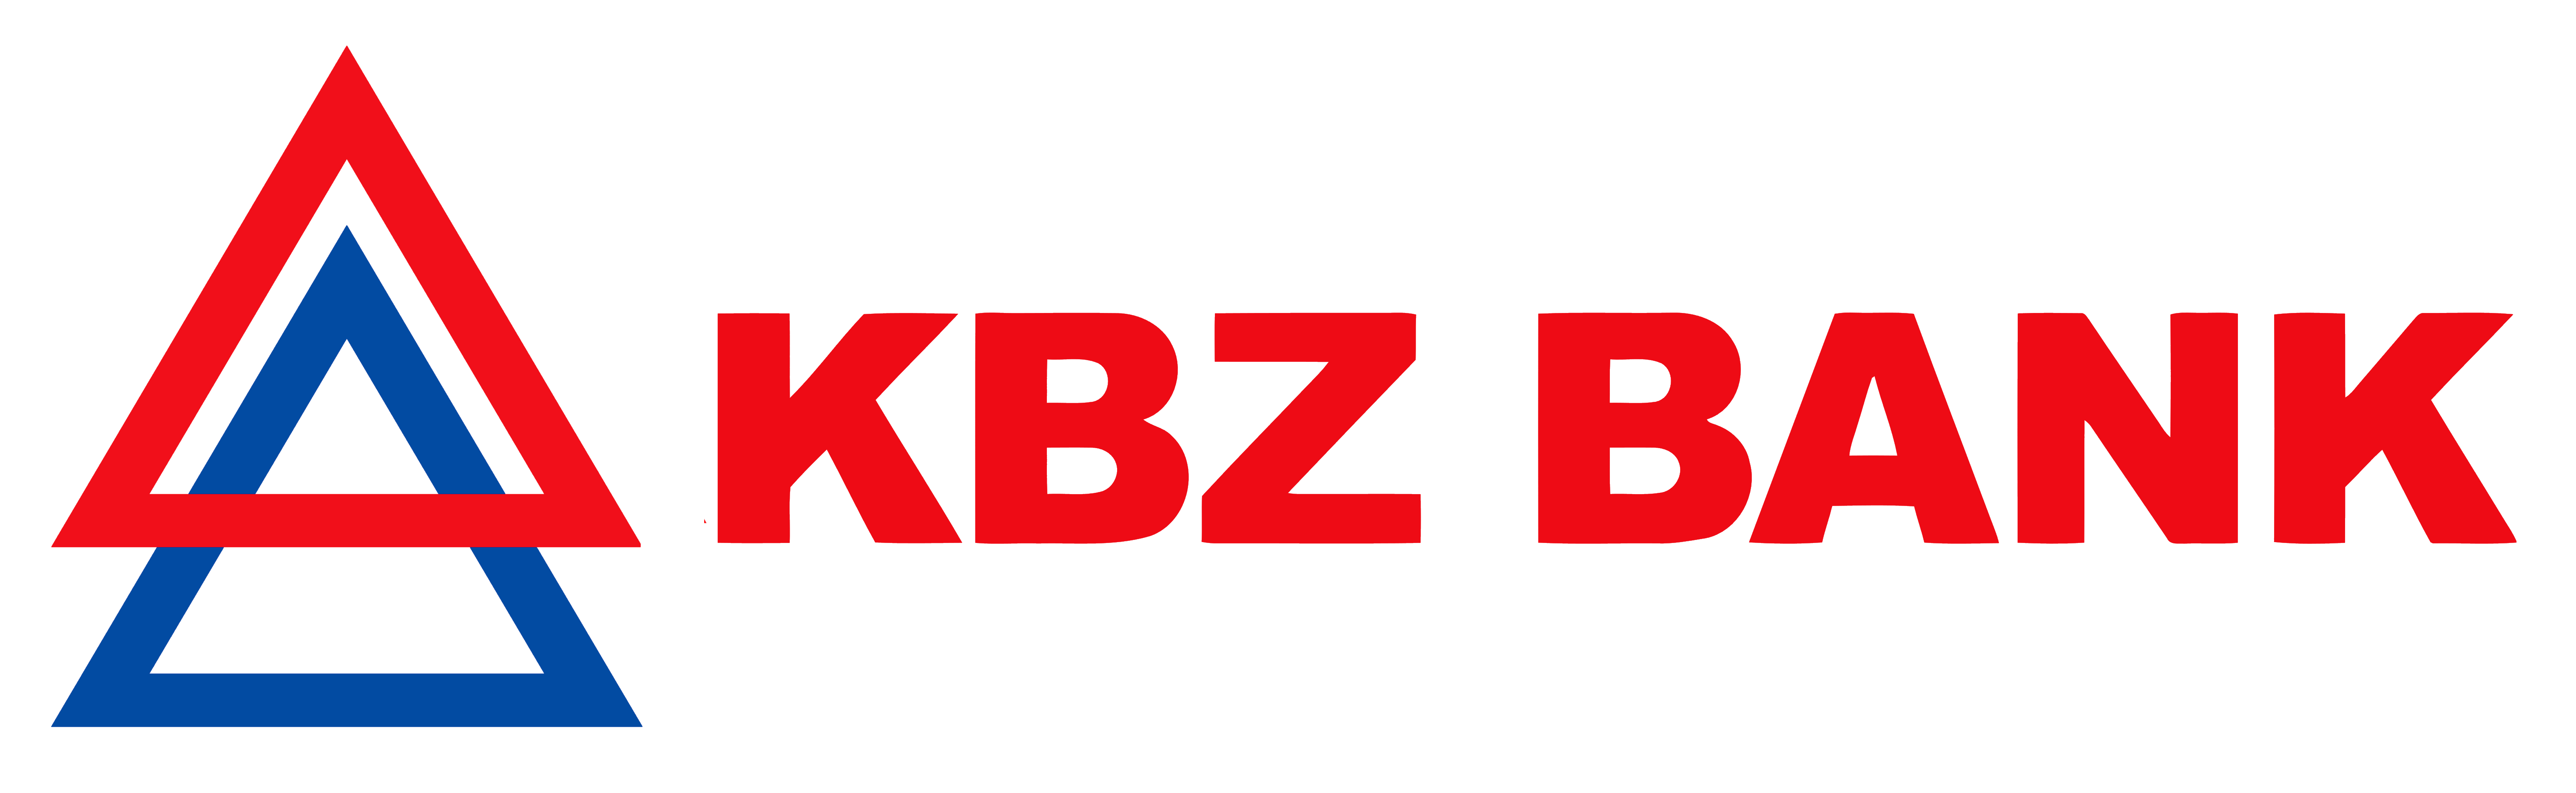 KBZ Bank logo, logotype